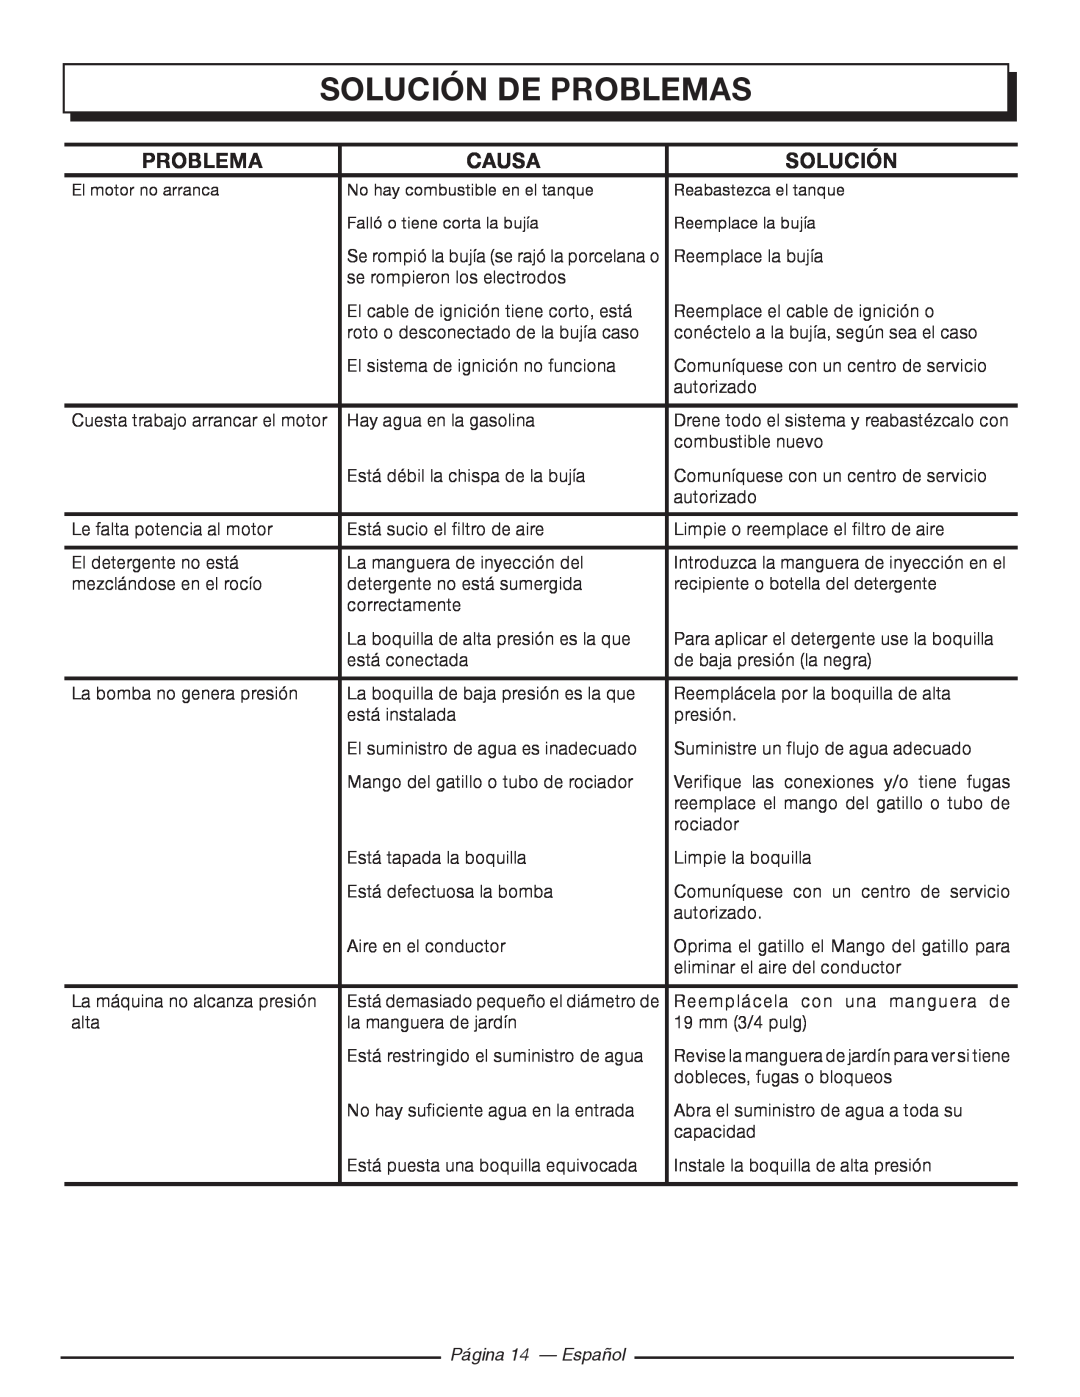 Homelite UT80993 manuel dutilisation Solución De Problemas, Causa, Página 14 - Español 